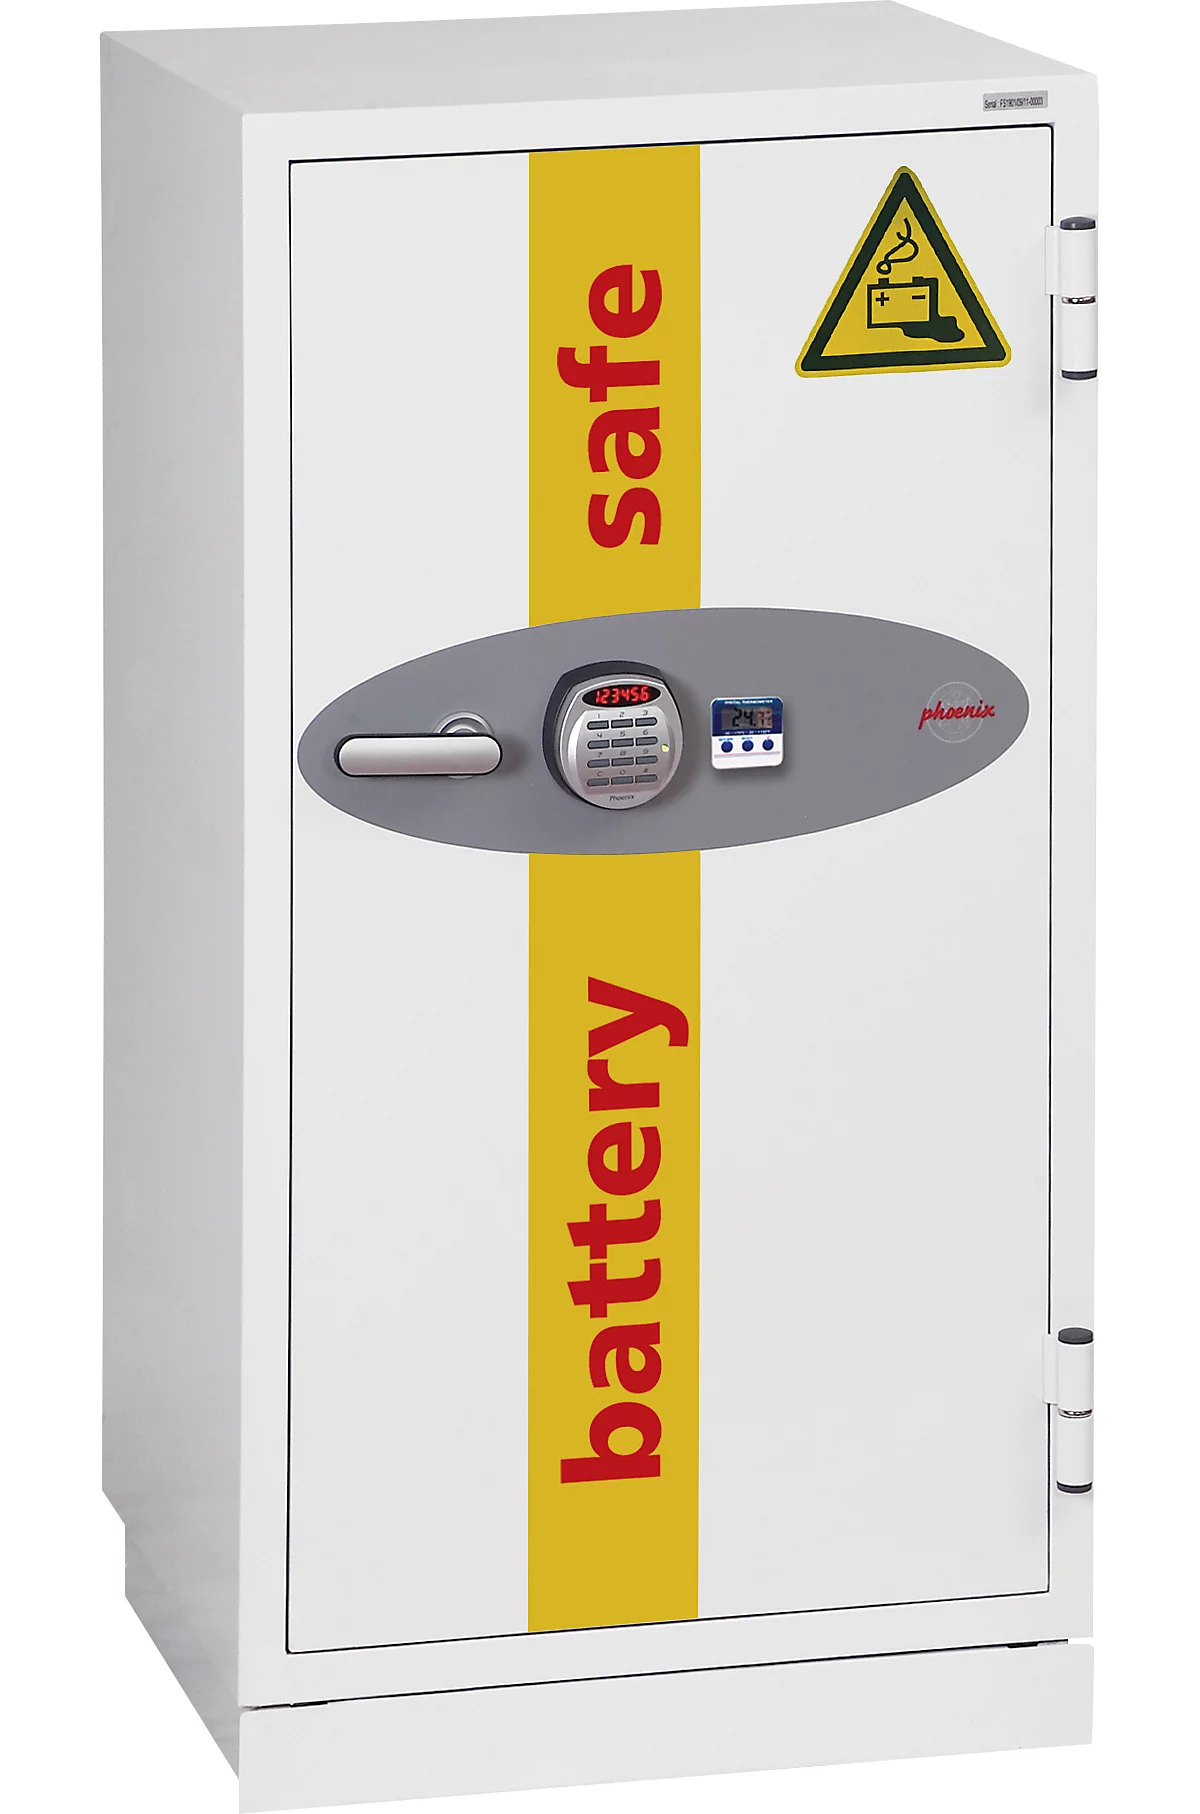 Phoenix Battery Commander BS1931E, Aufbewahrungstresor für Batterien, B 690 × T 650 × H 1160 mm, feuergeschützt, Temperaturanzeige, Mehrfachverriegelung, 2 Schwerlastfachböden, elektronisches Tastenschloss